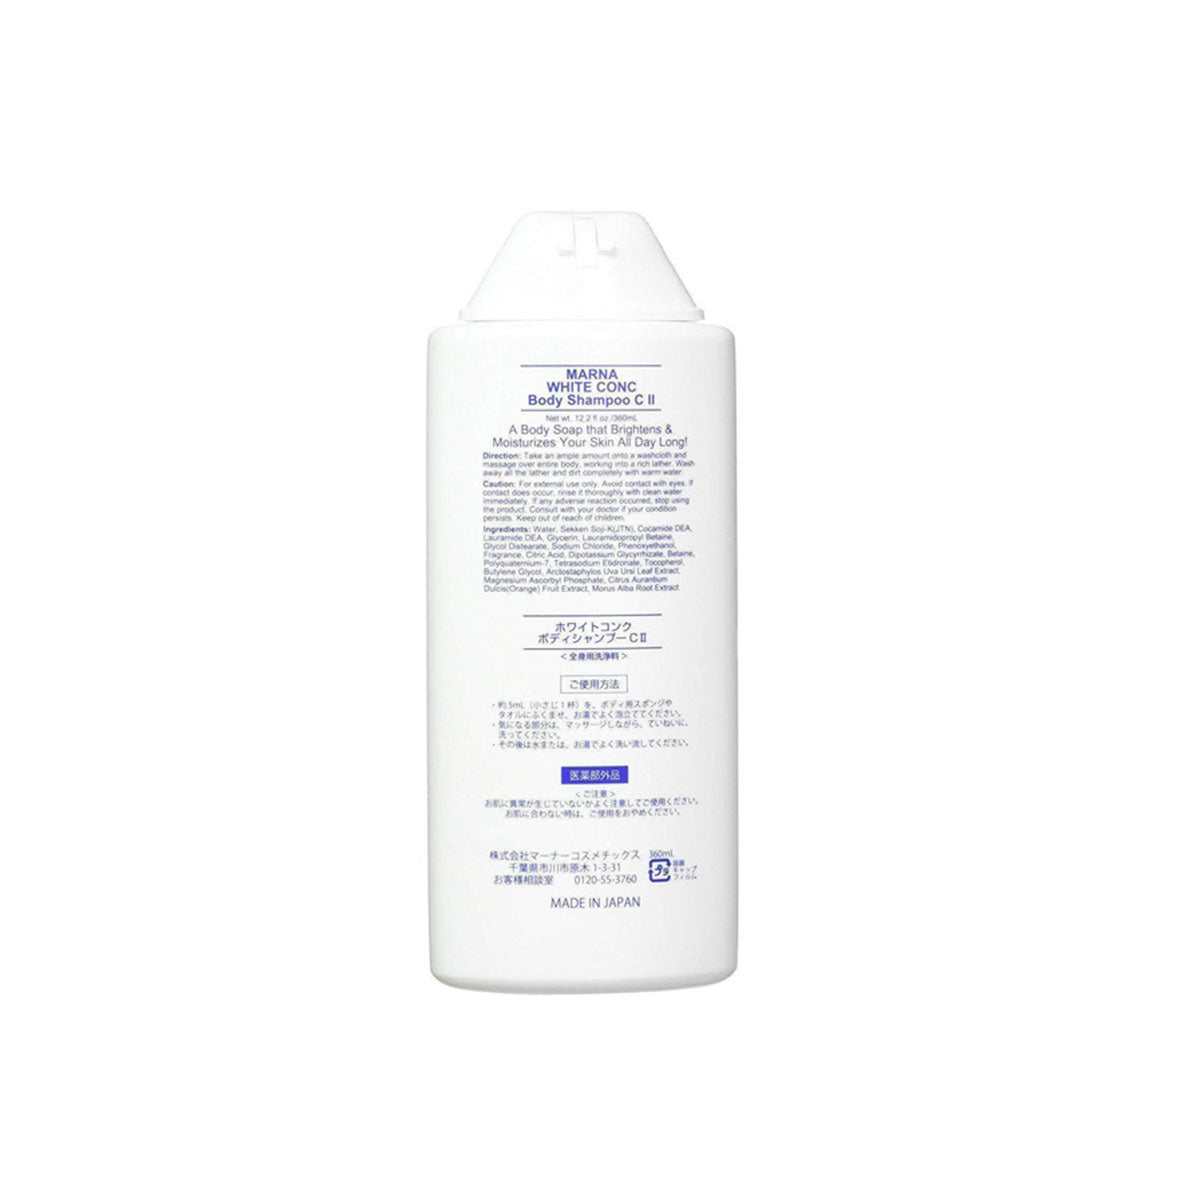 White Conc Body Shampoo C II 360ml